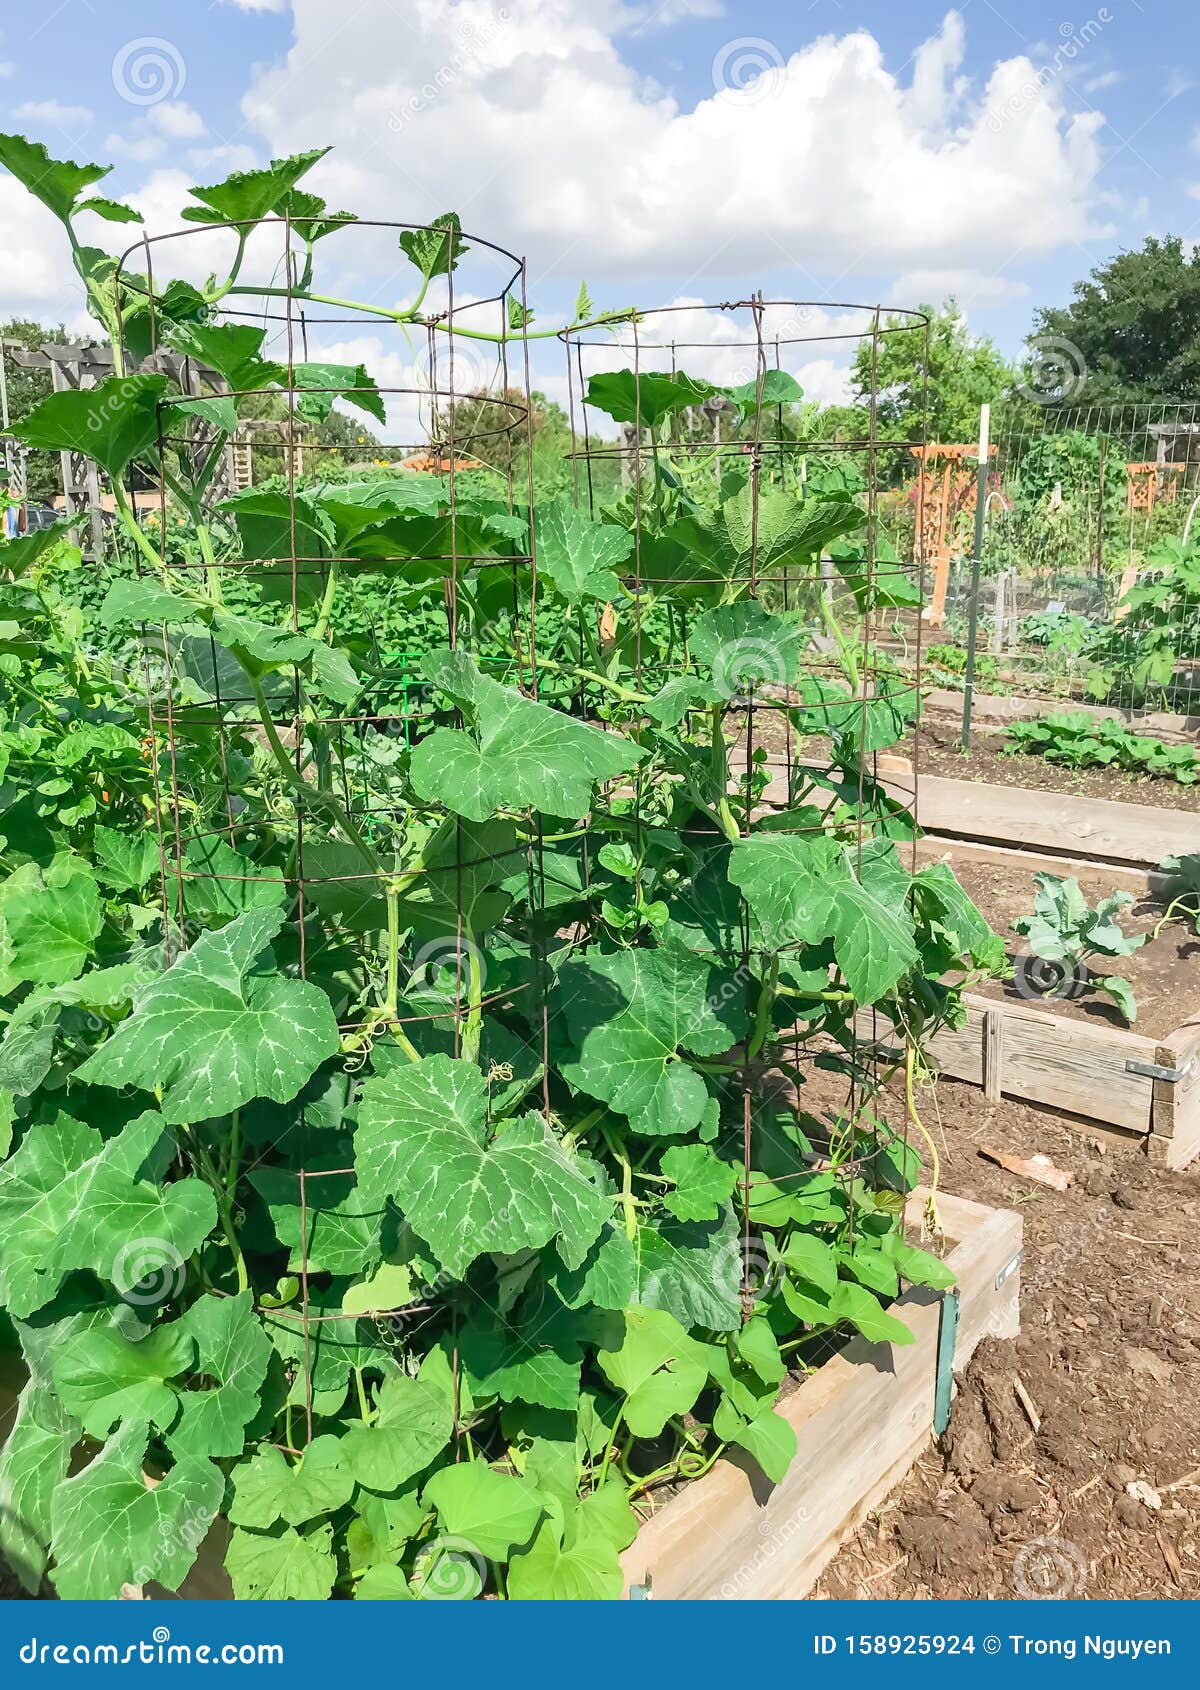 Urban Growing Community Garden With Green Mature Crops Near Dallas